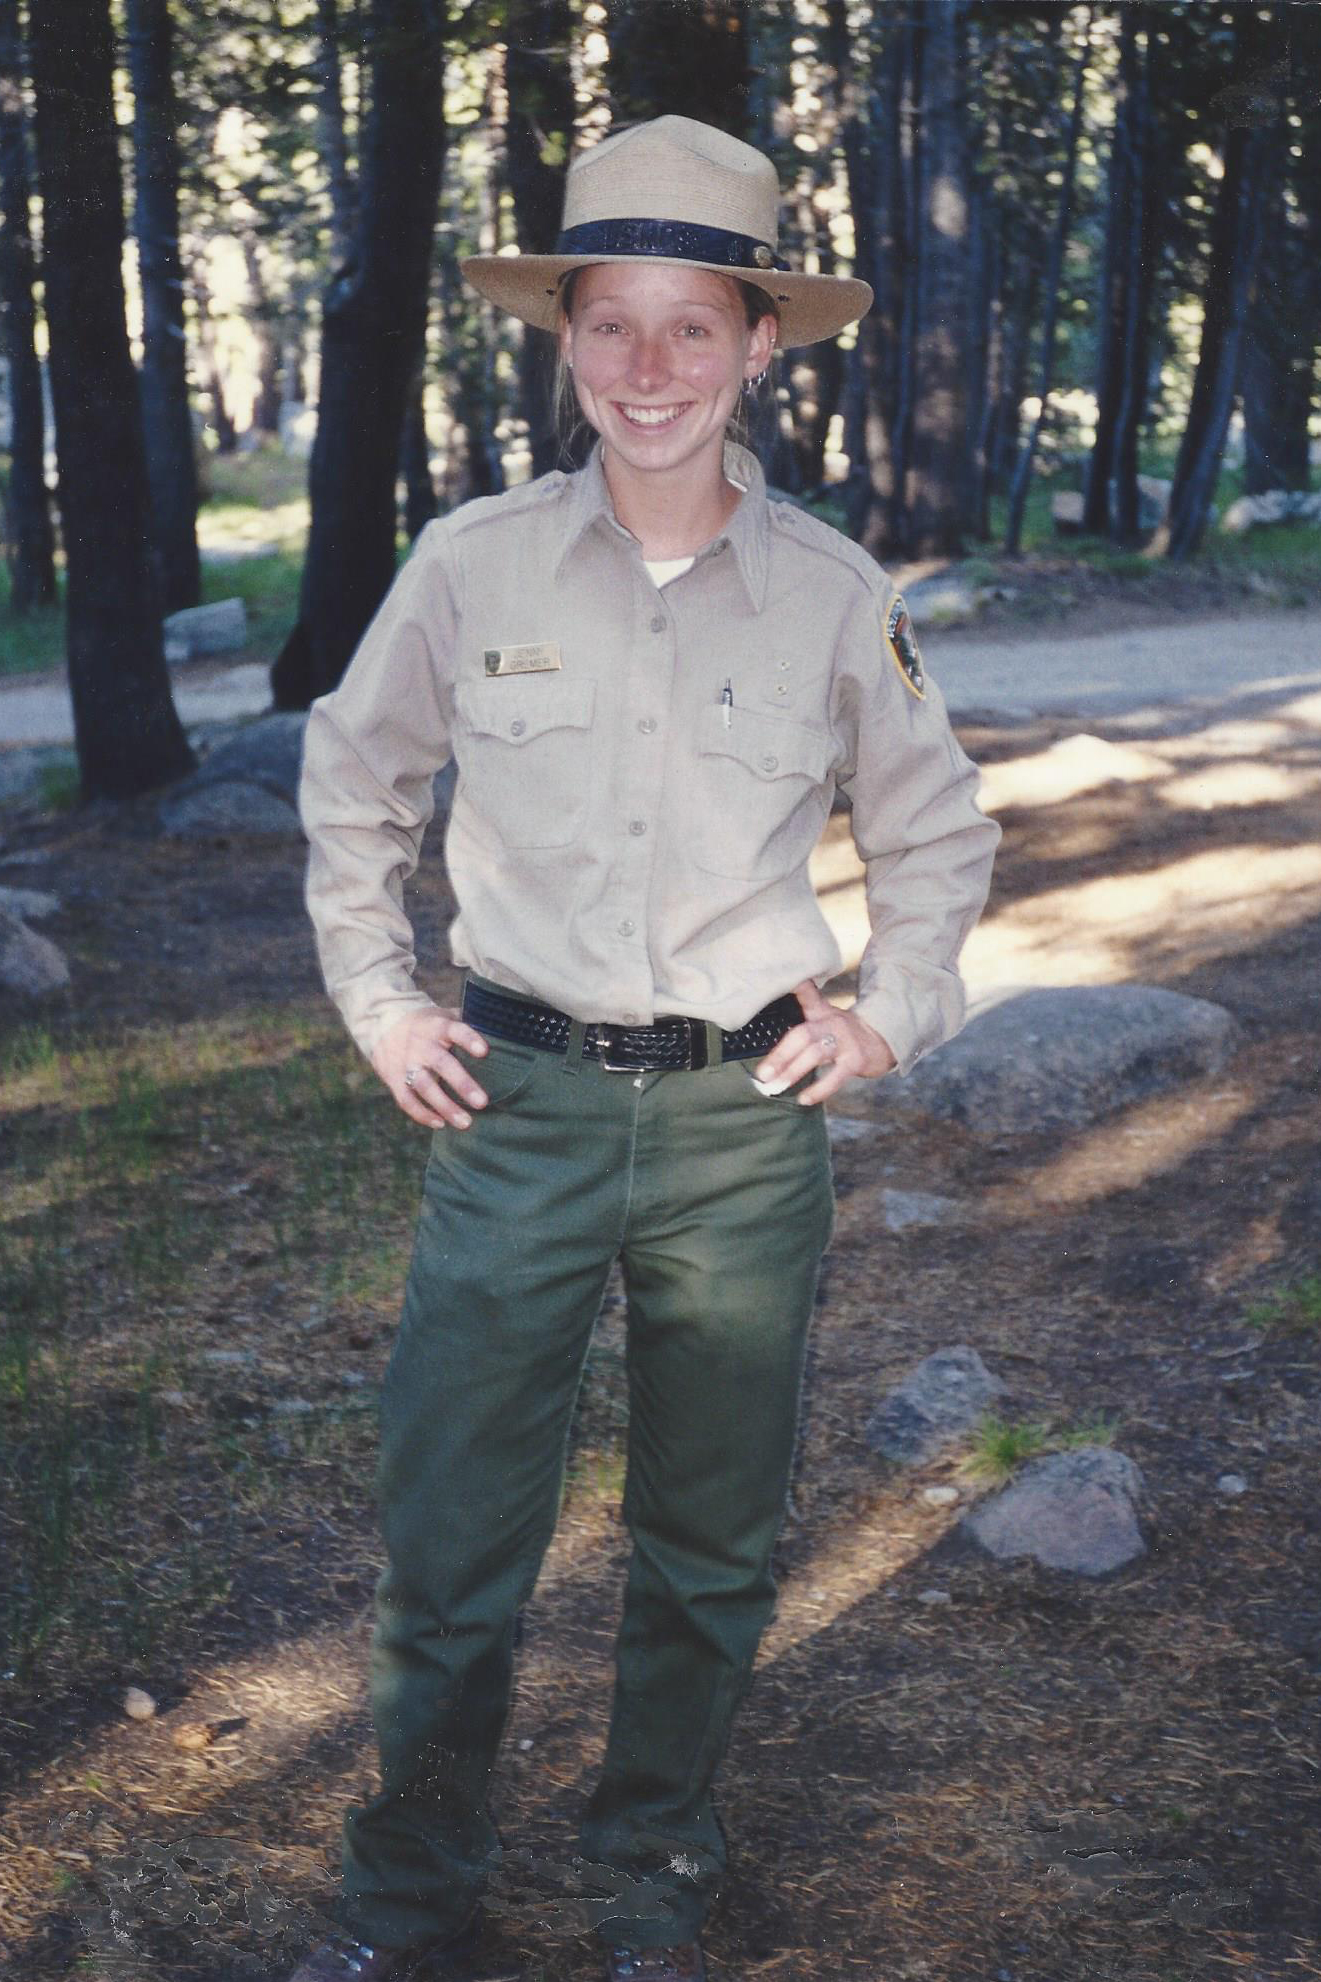 Jennifer Gremer in her park ranger uniform